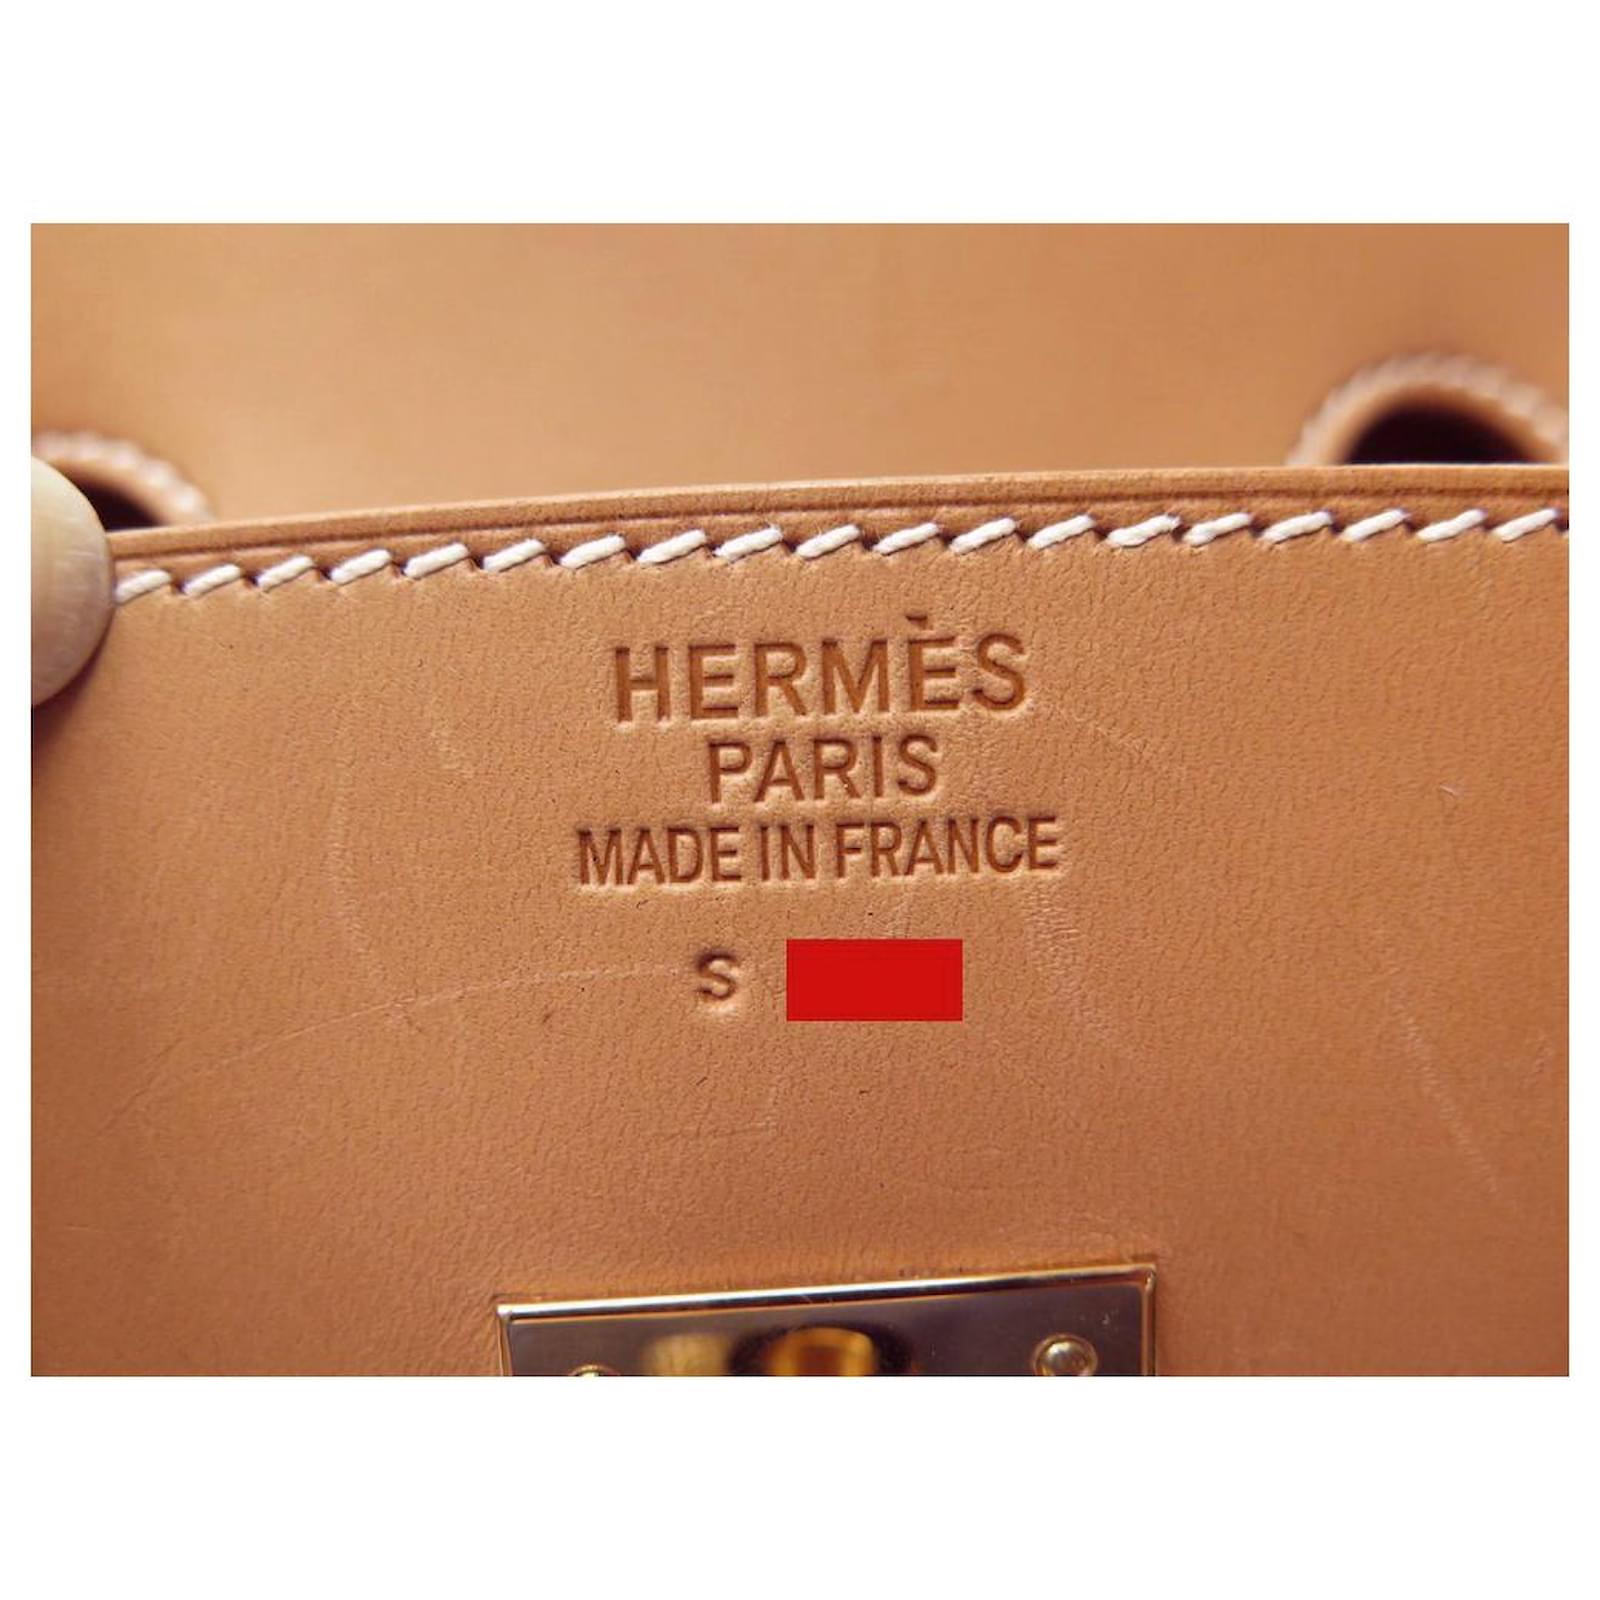 Hermès Hermes Birkin handbag 35 LEATHER BARENIA CAMEL GOLD LEATHER